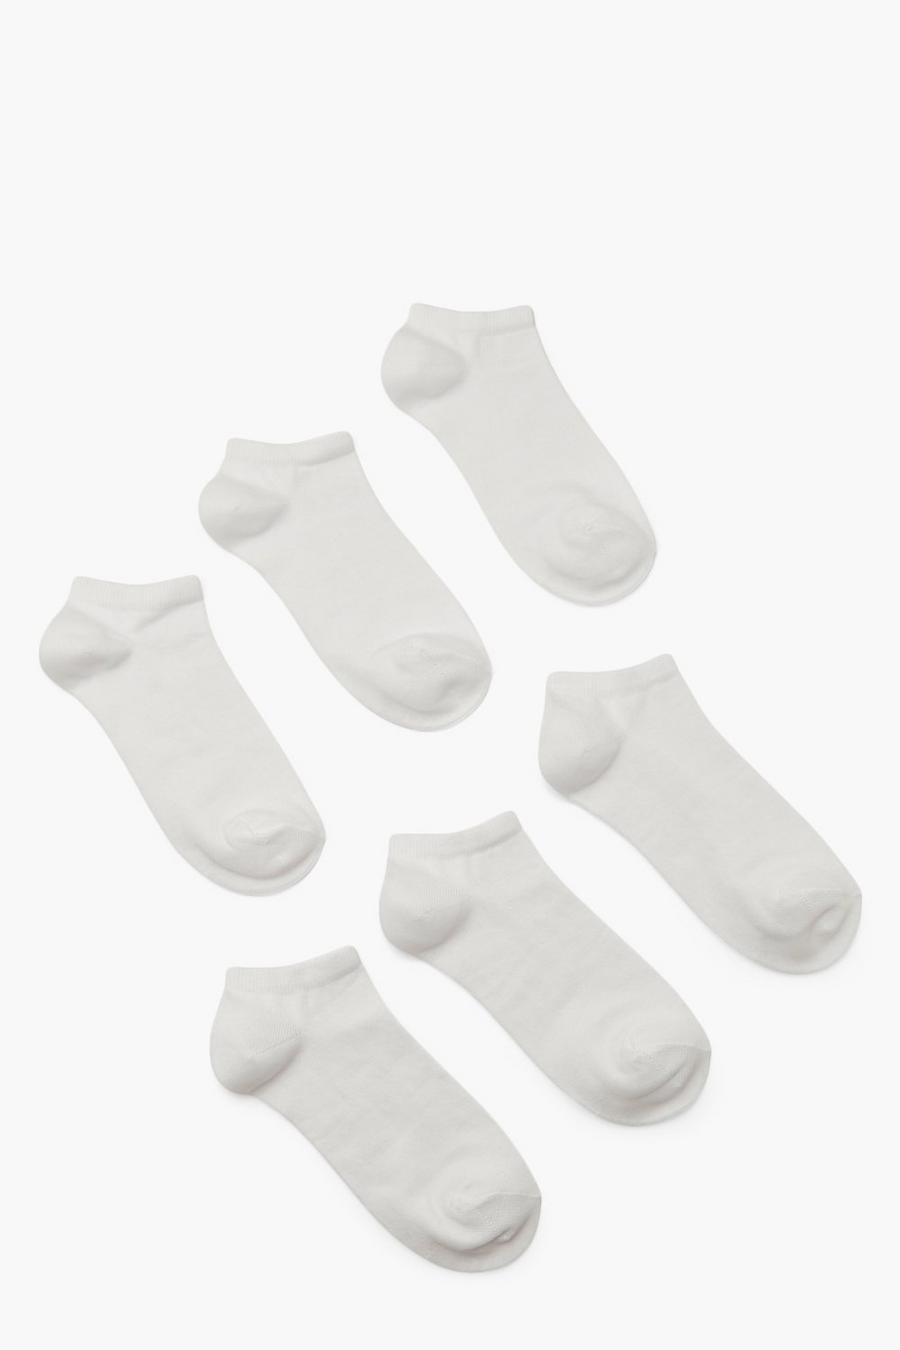 White Sneakers Socks 6 Pack